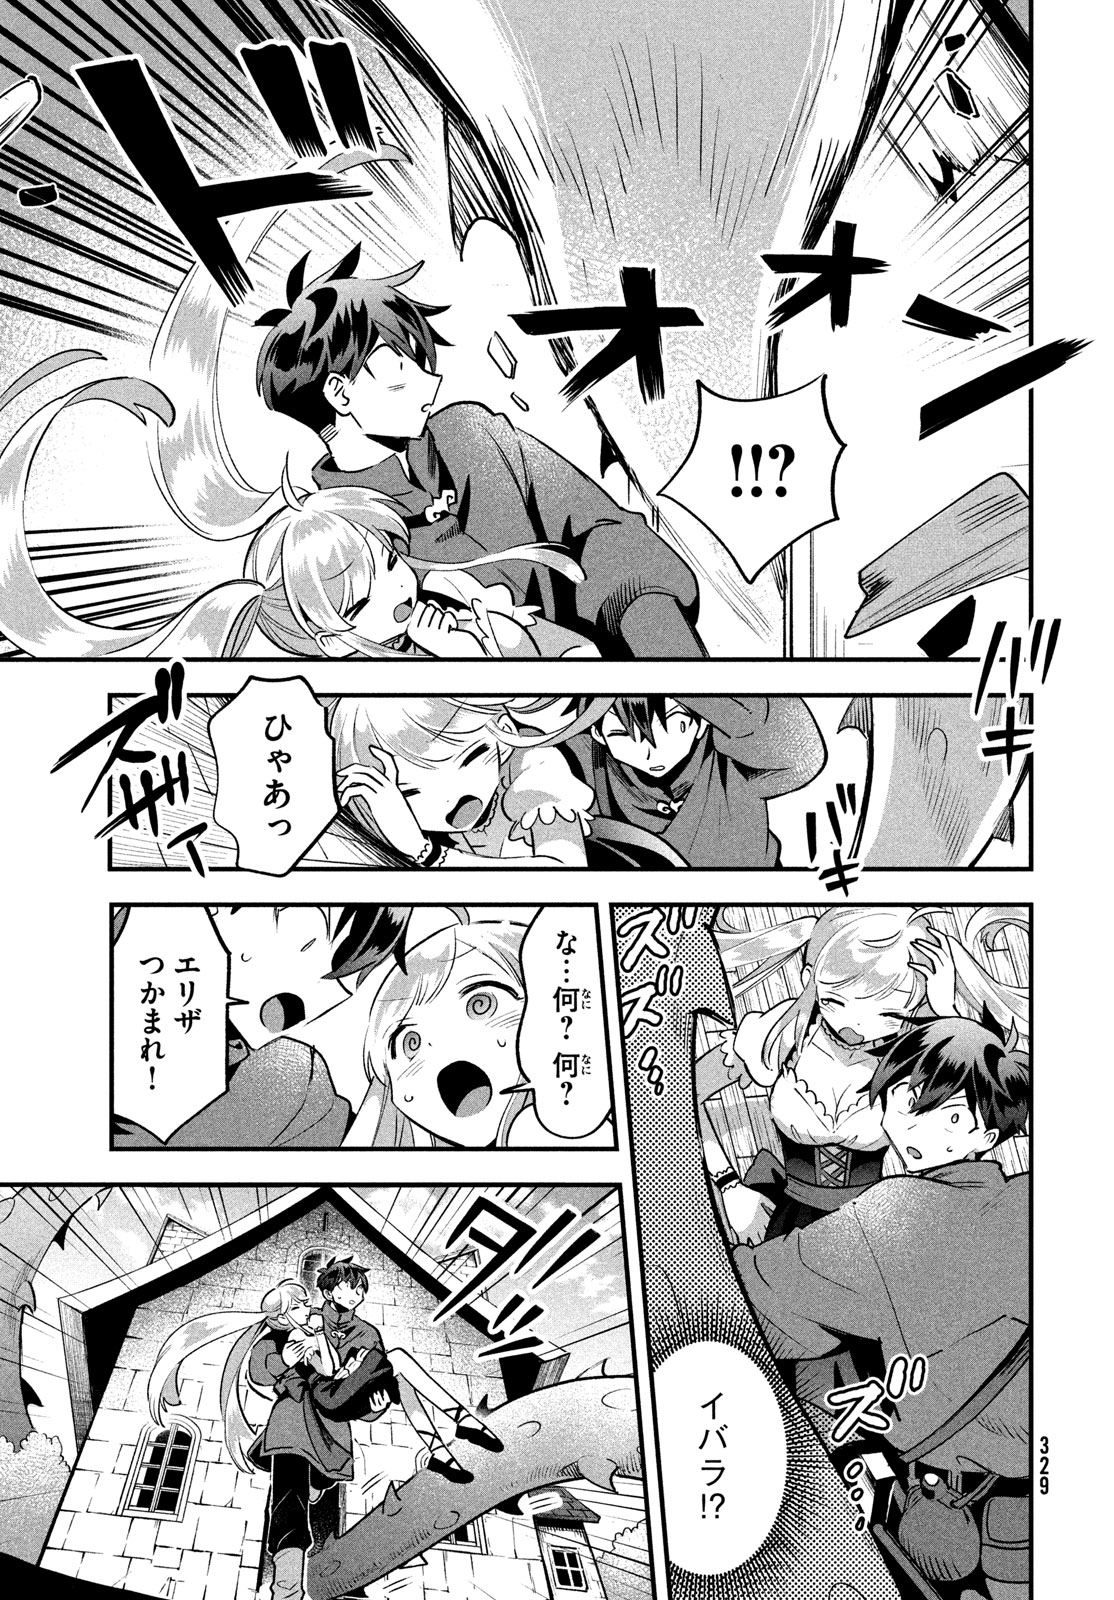 7-nin no Nemuri Hime - Chapter 43 - Page 3